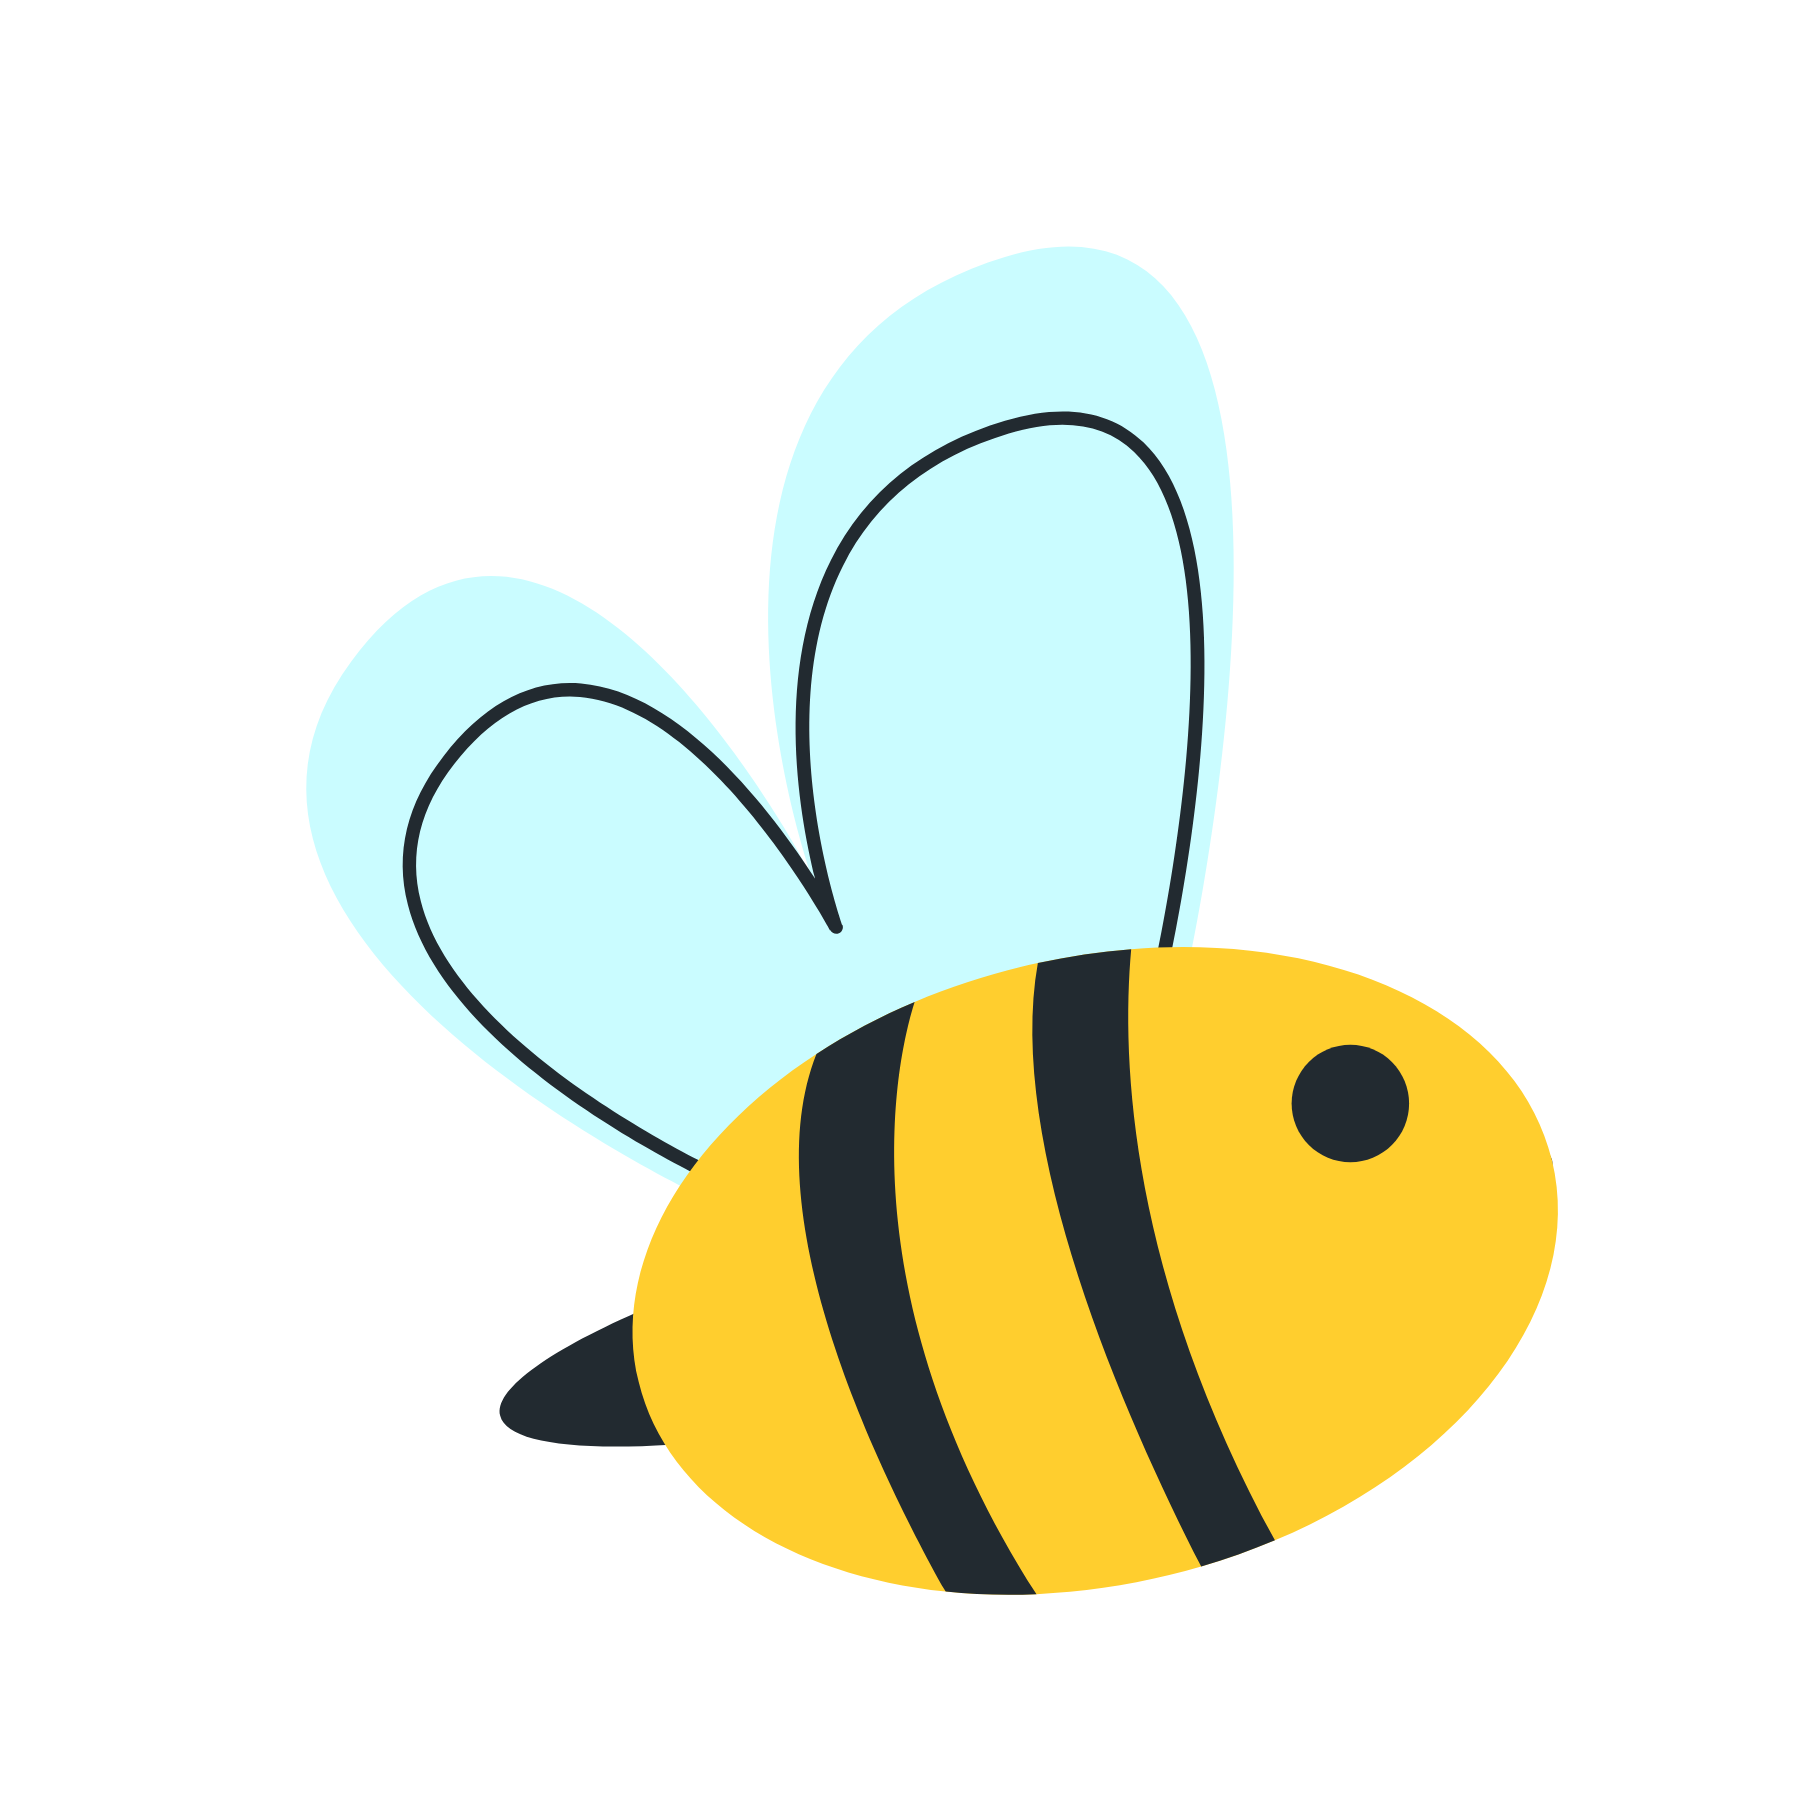 bee in flight